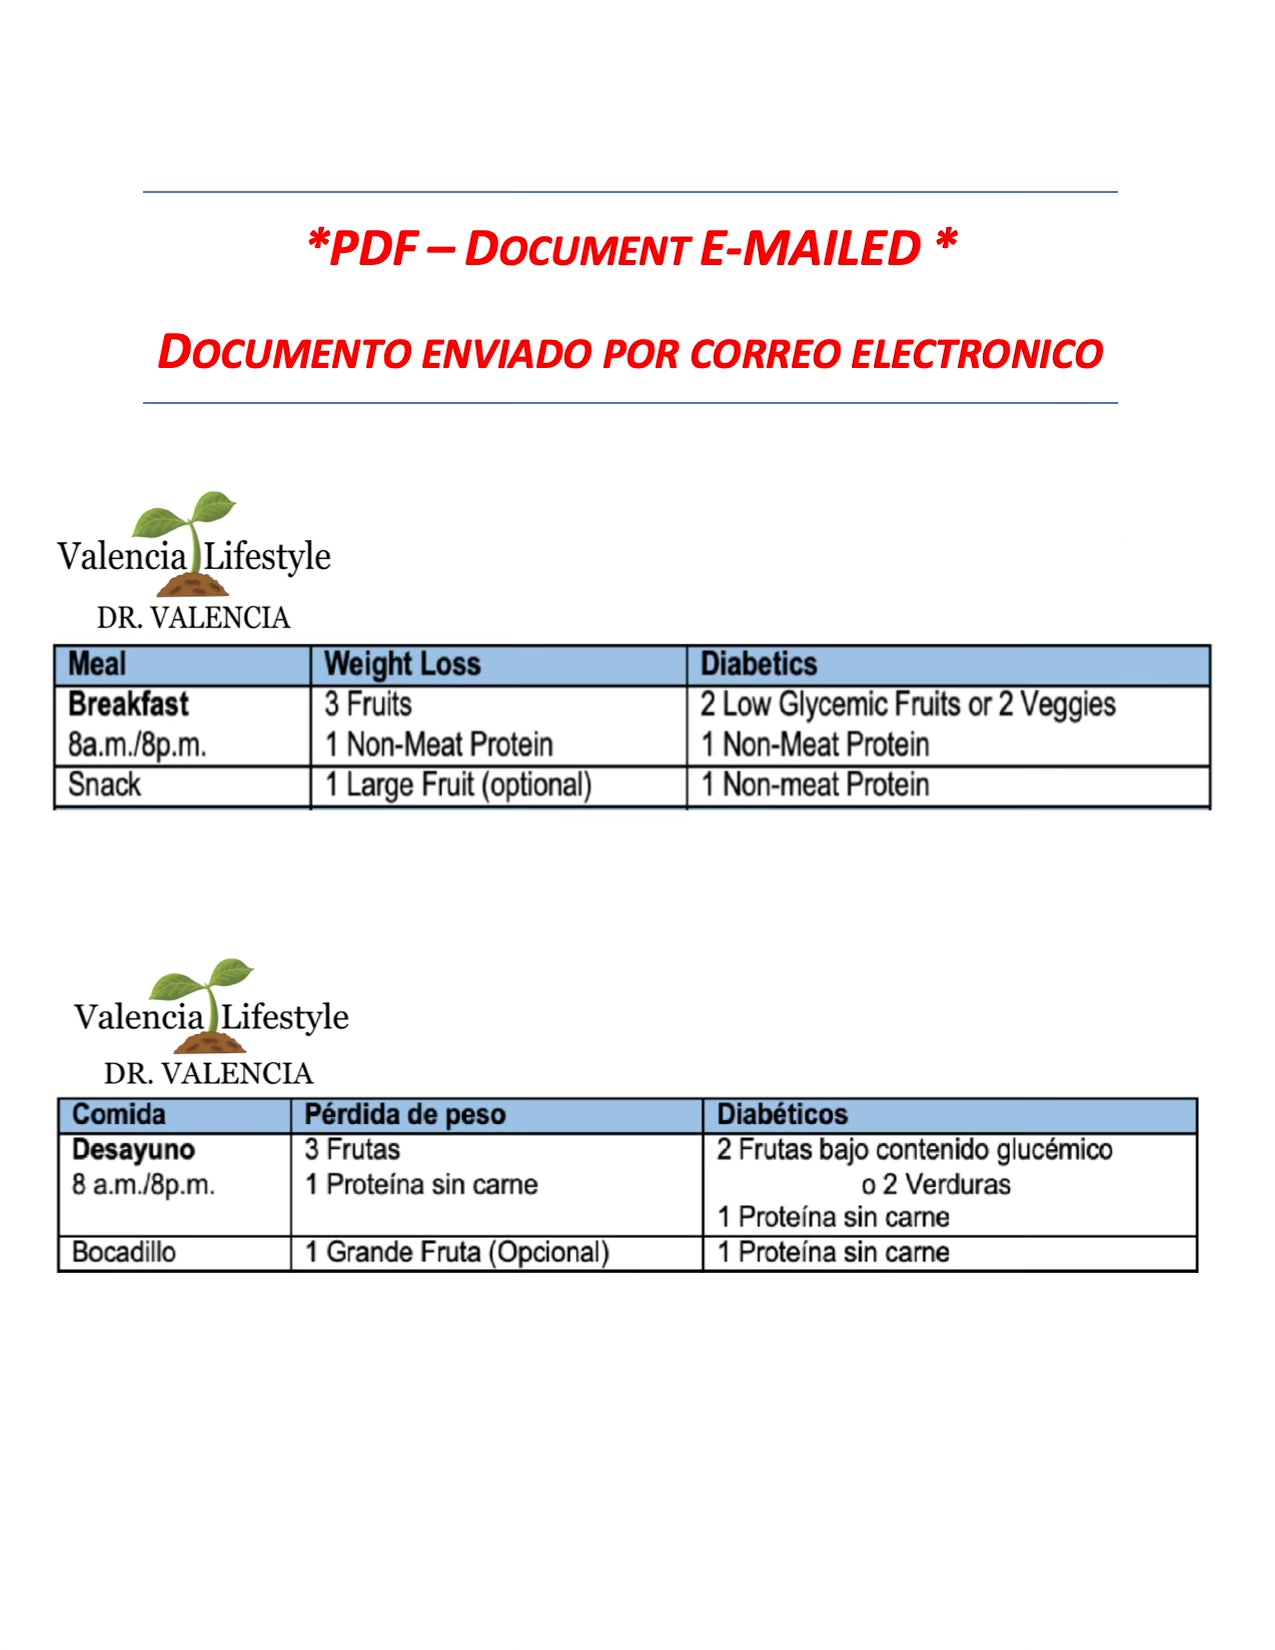 Dr. Valencia New Lifestyle Plan *PDF  (Portable Document Format)*   /Dr. Valencia Nuevo Plan de Estilo de Vida *PDF (Formato de Documento Portátil)